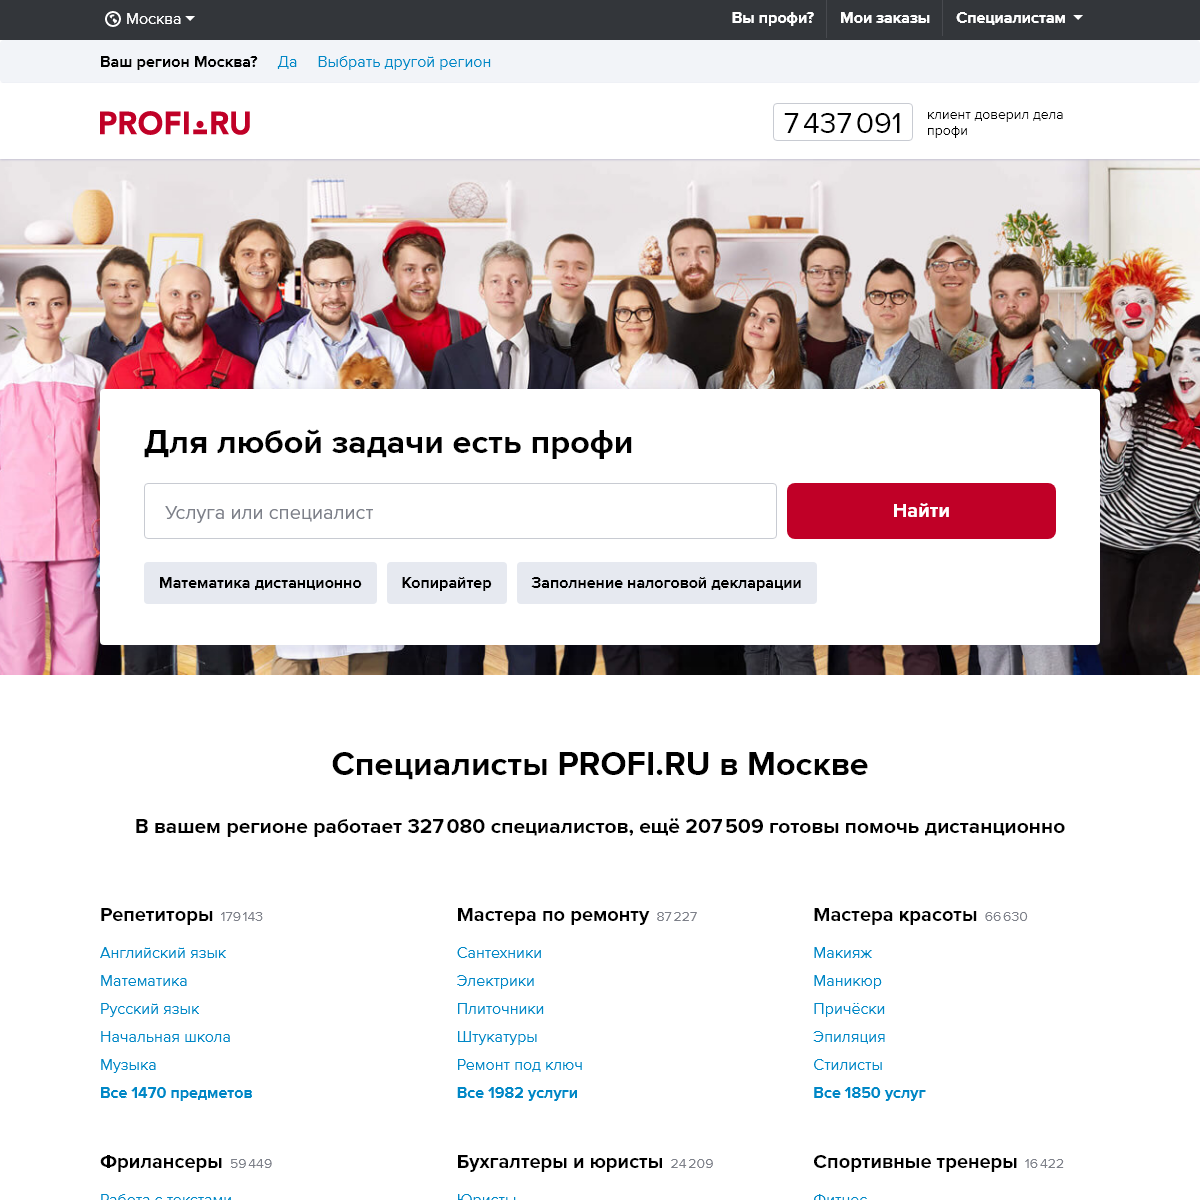 A complete backup of profi.ru